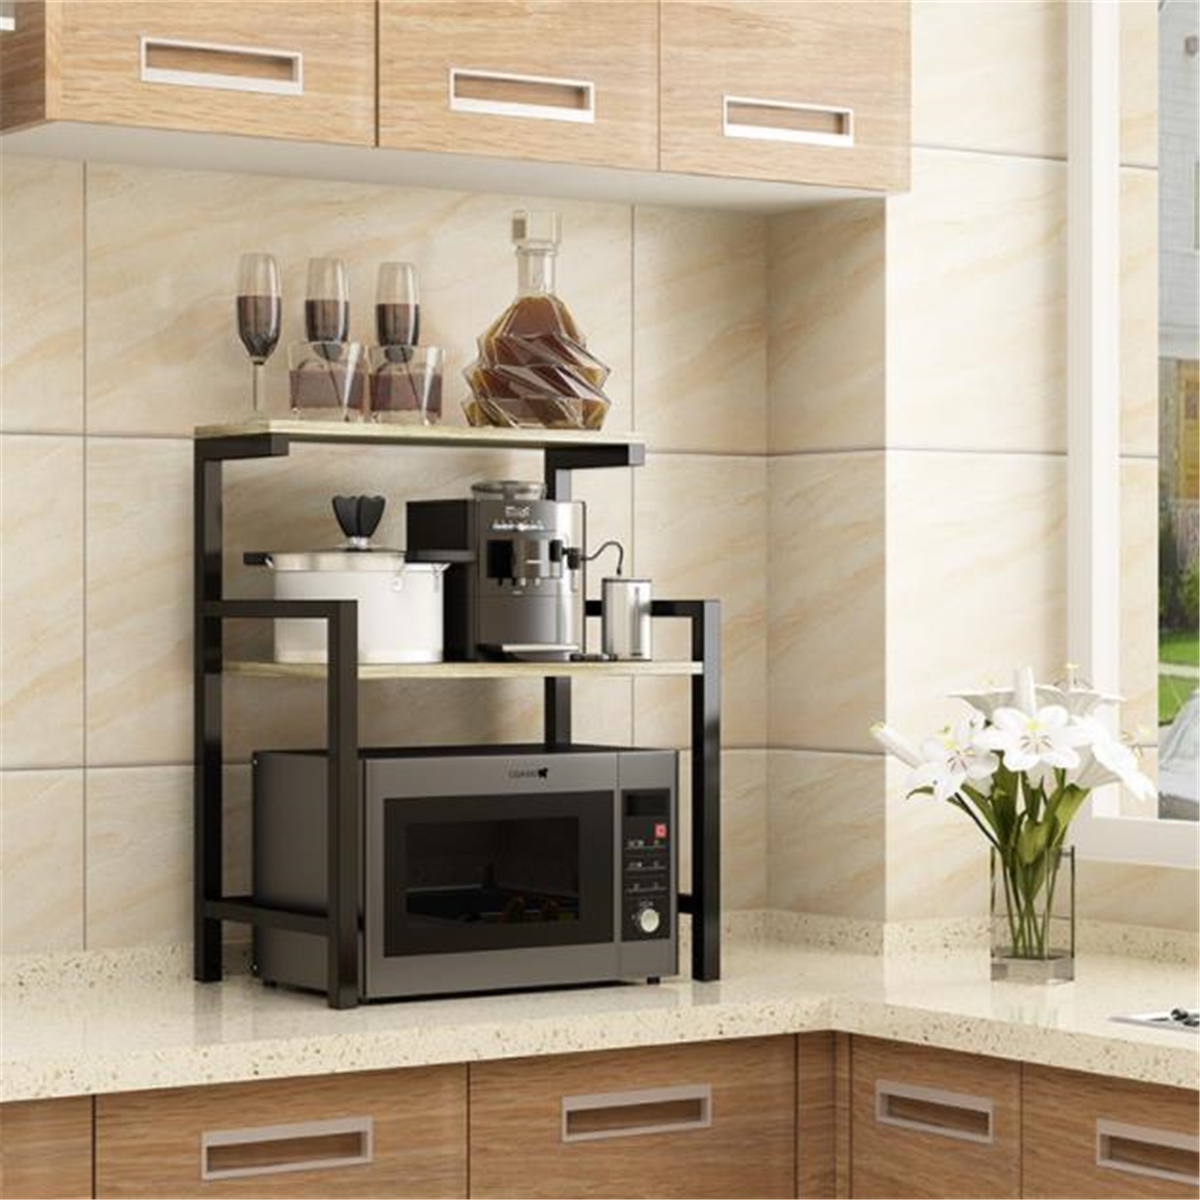 Double-Layer-Microwave-Oven-Shelf-Rack-Kitchen-Storage-Holders-Bath-Shelf-Home-Office-Shelf-Organize-1763047-7